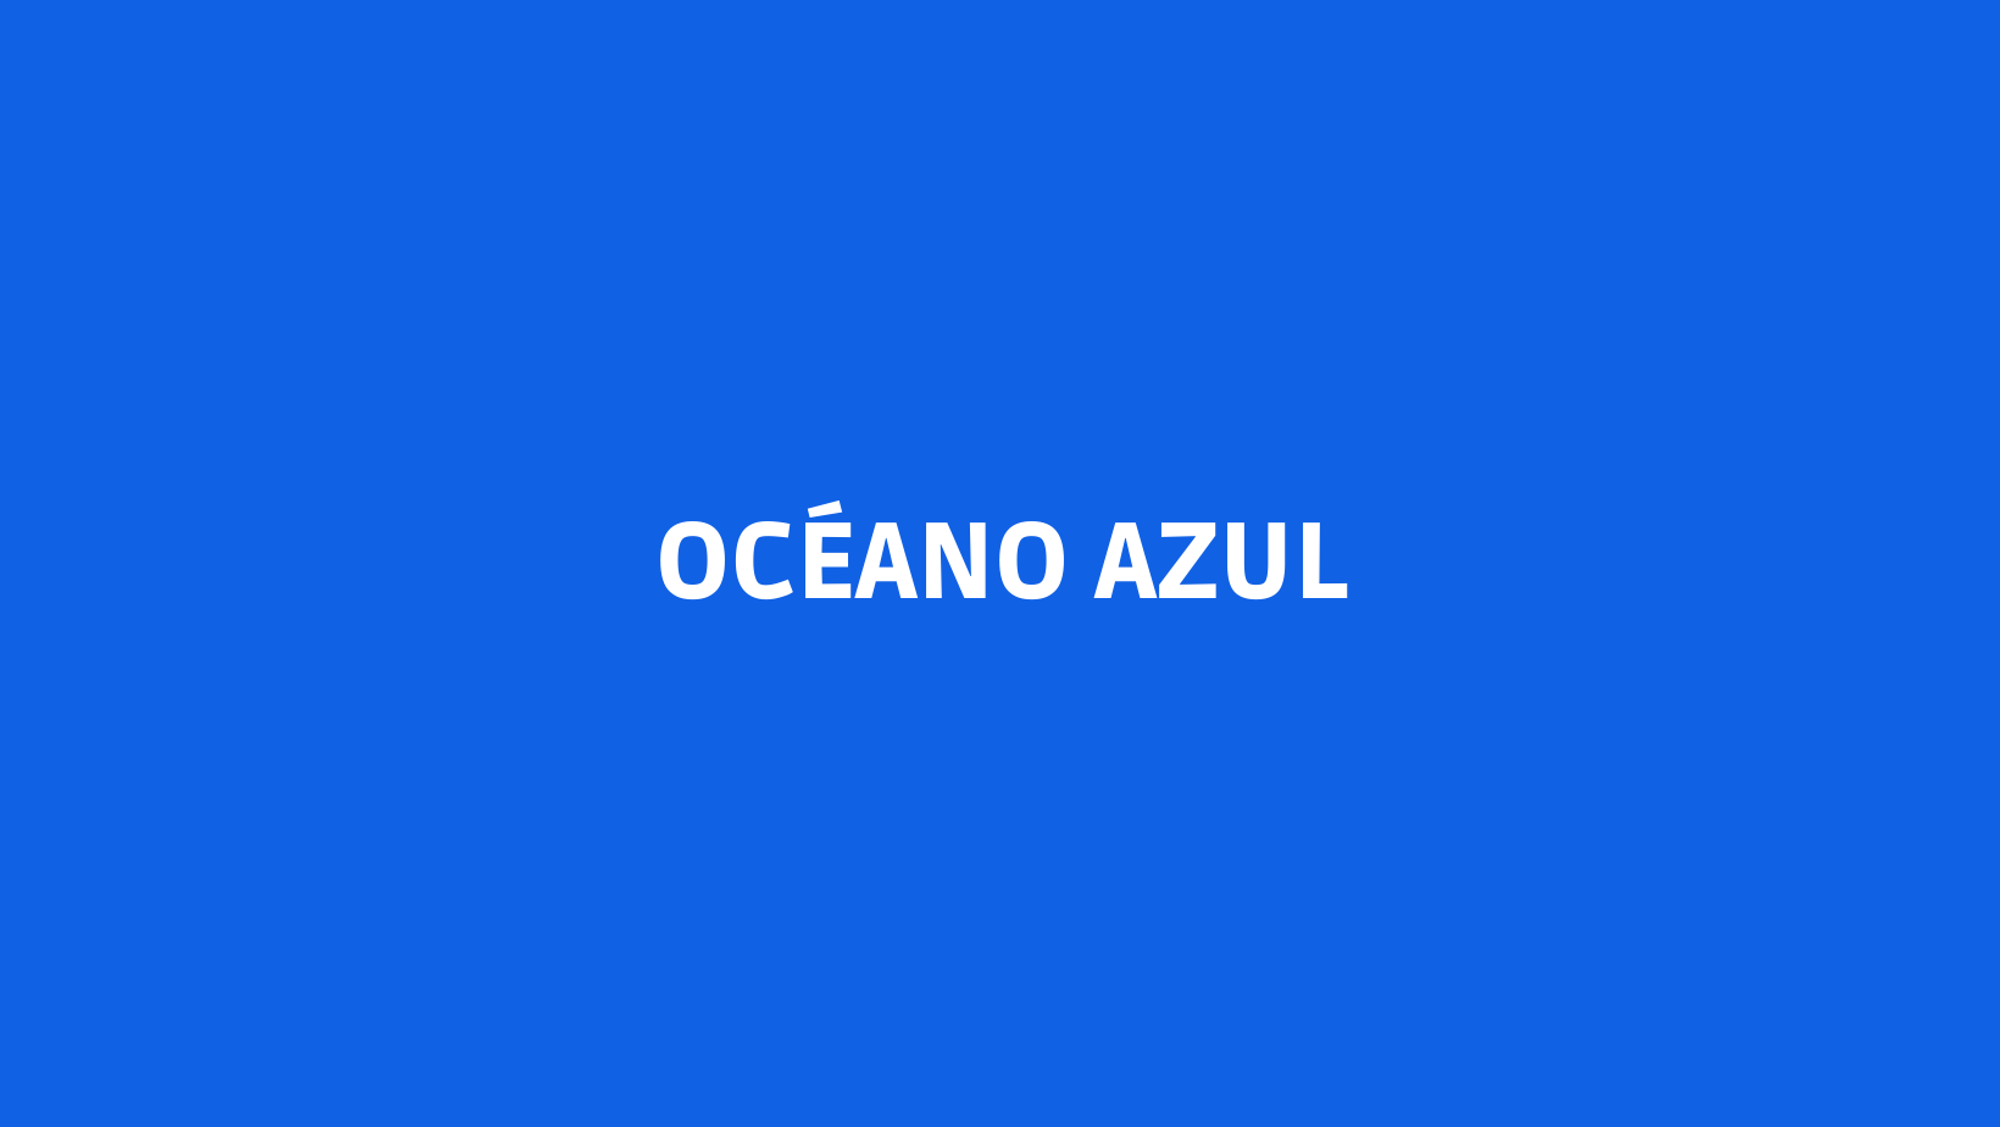 Oceano Azul